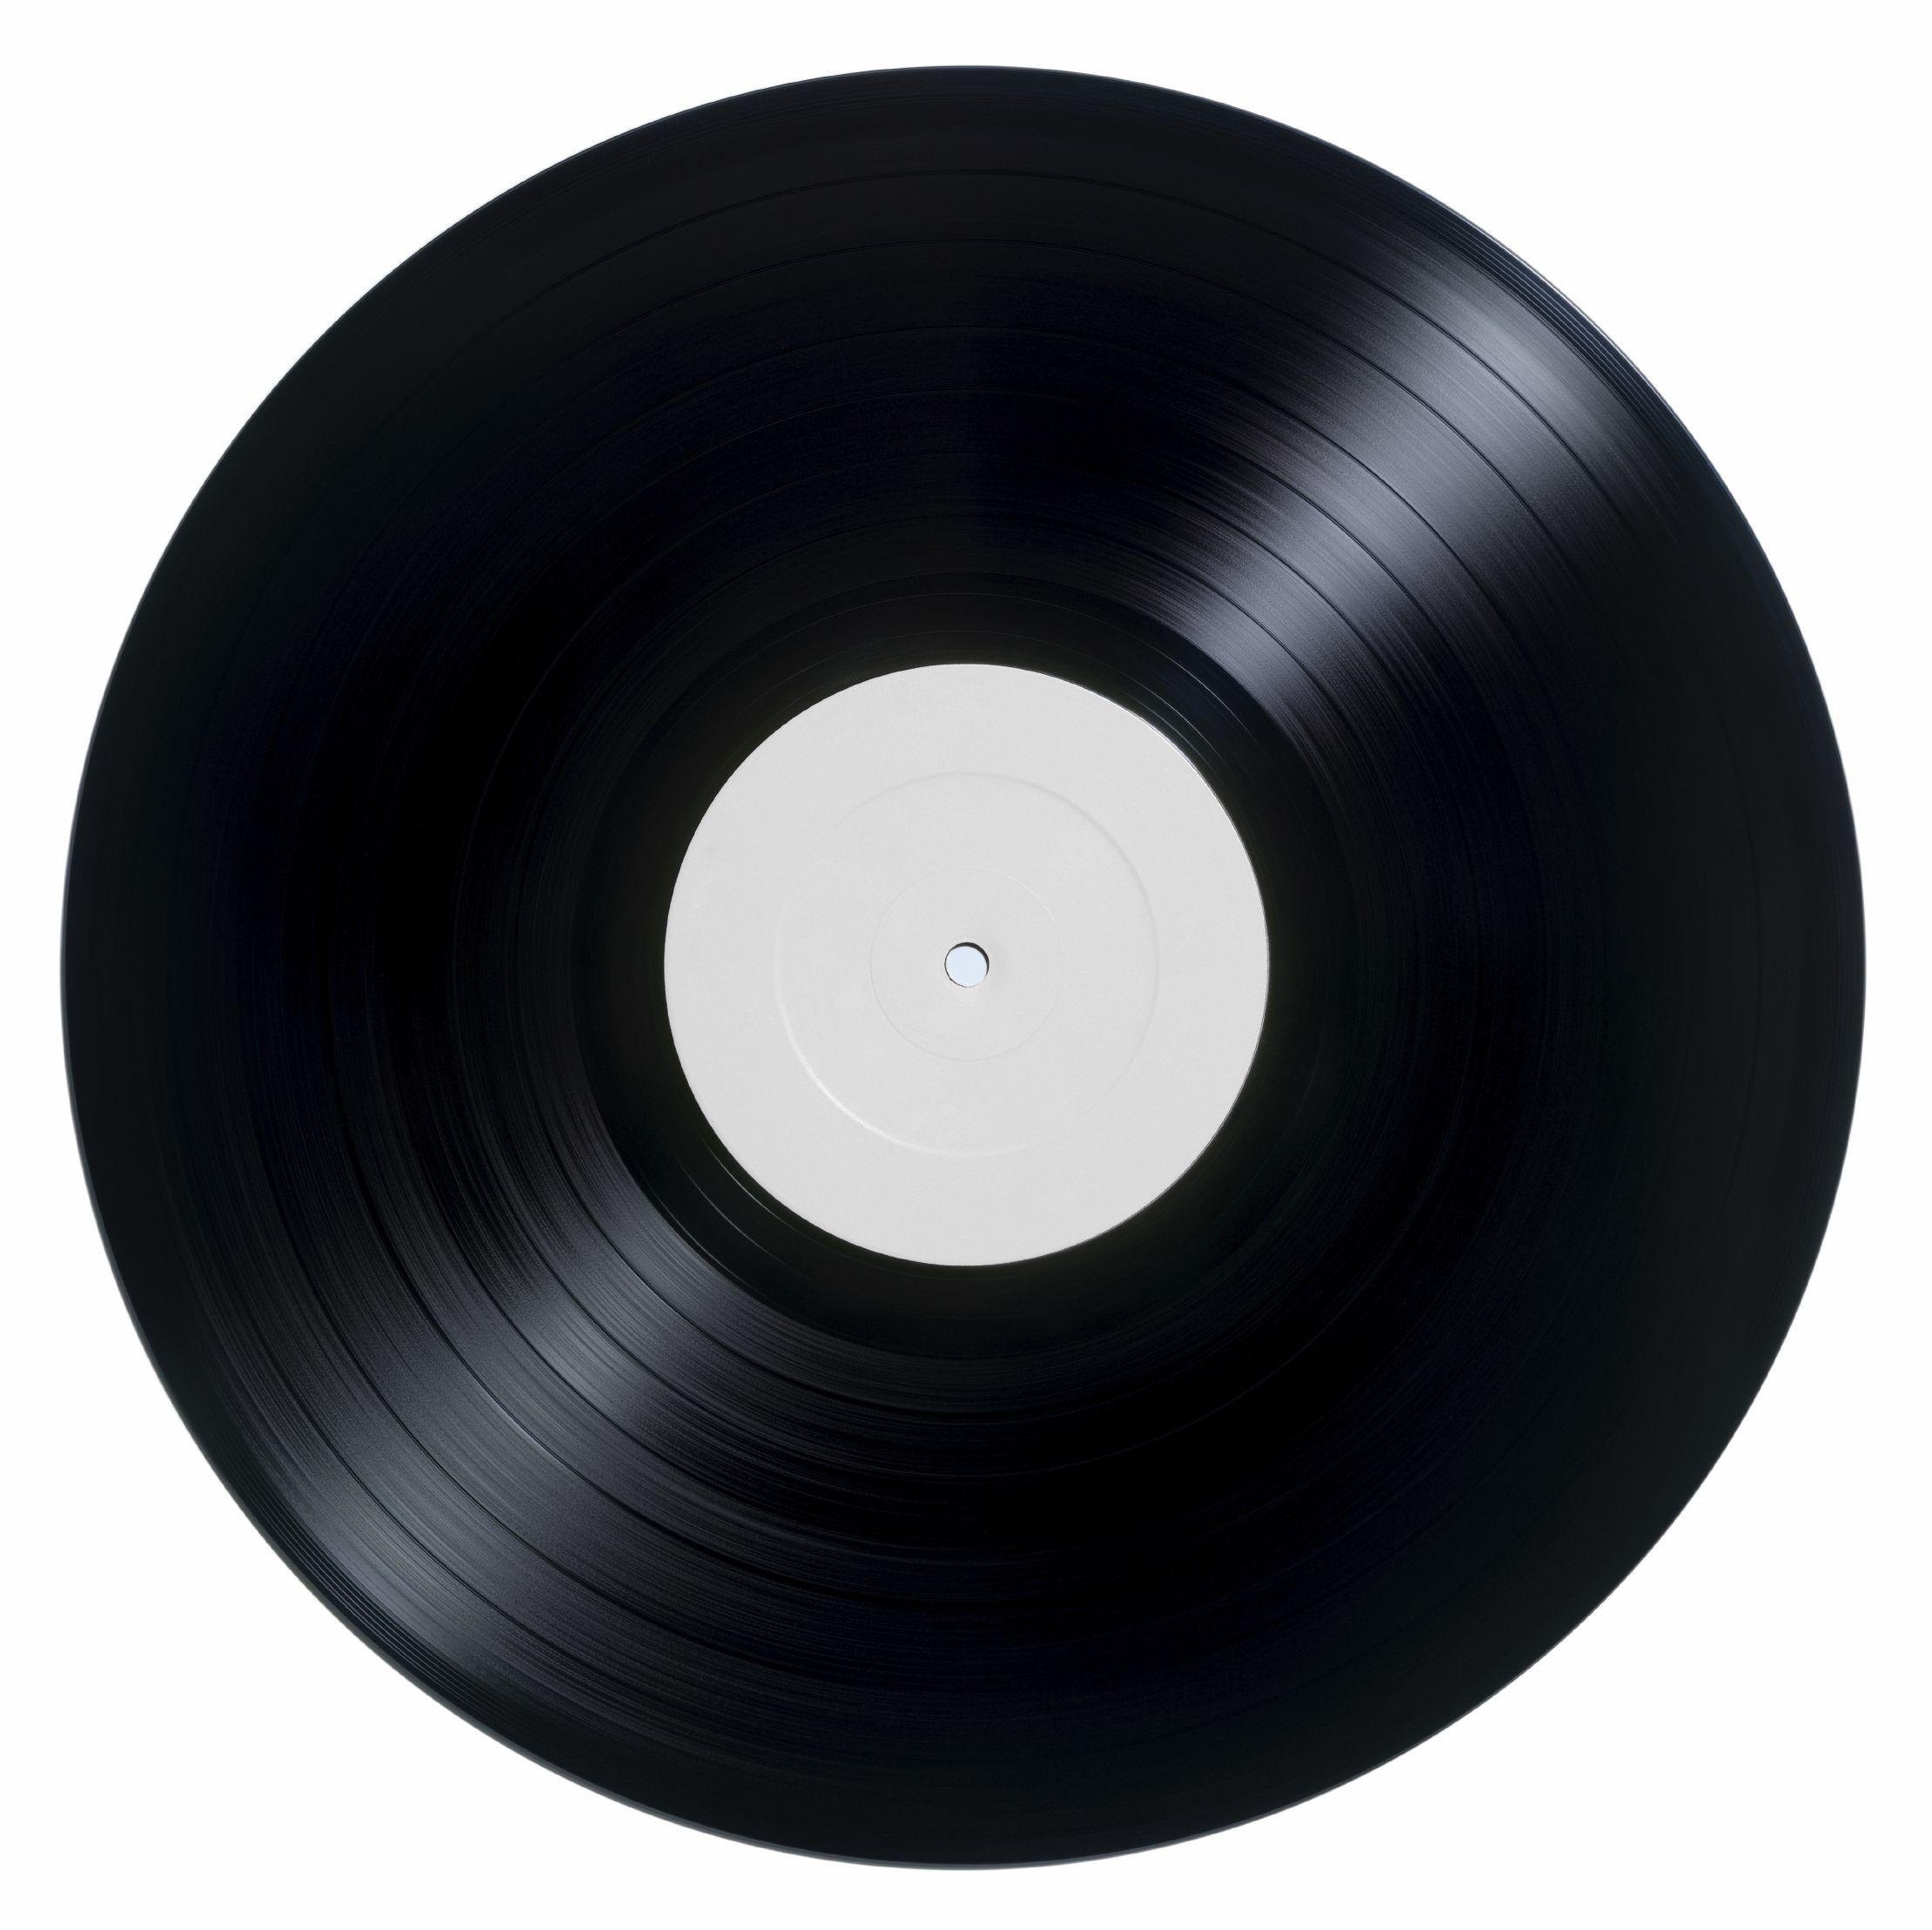 Free photo: Black Record Vinyl - Album, Black, Classic - Free Download ...